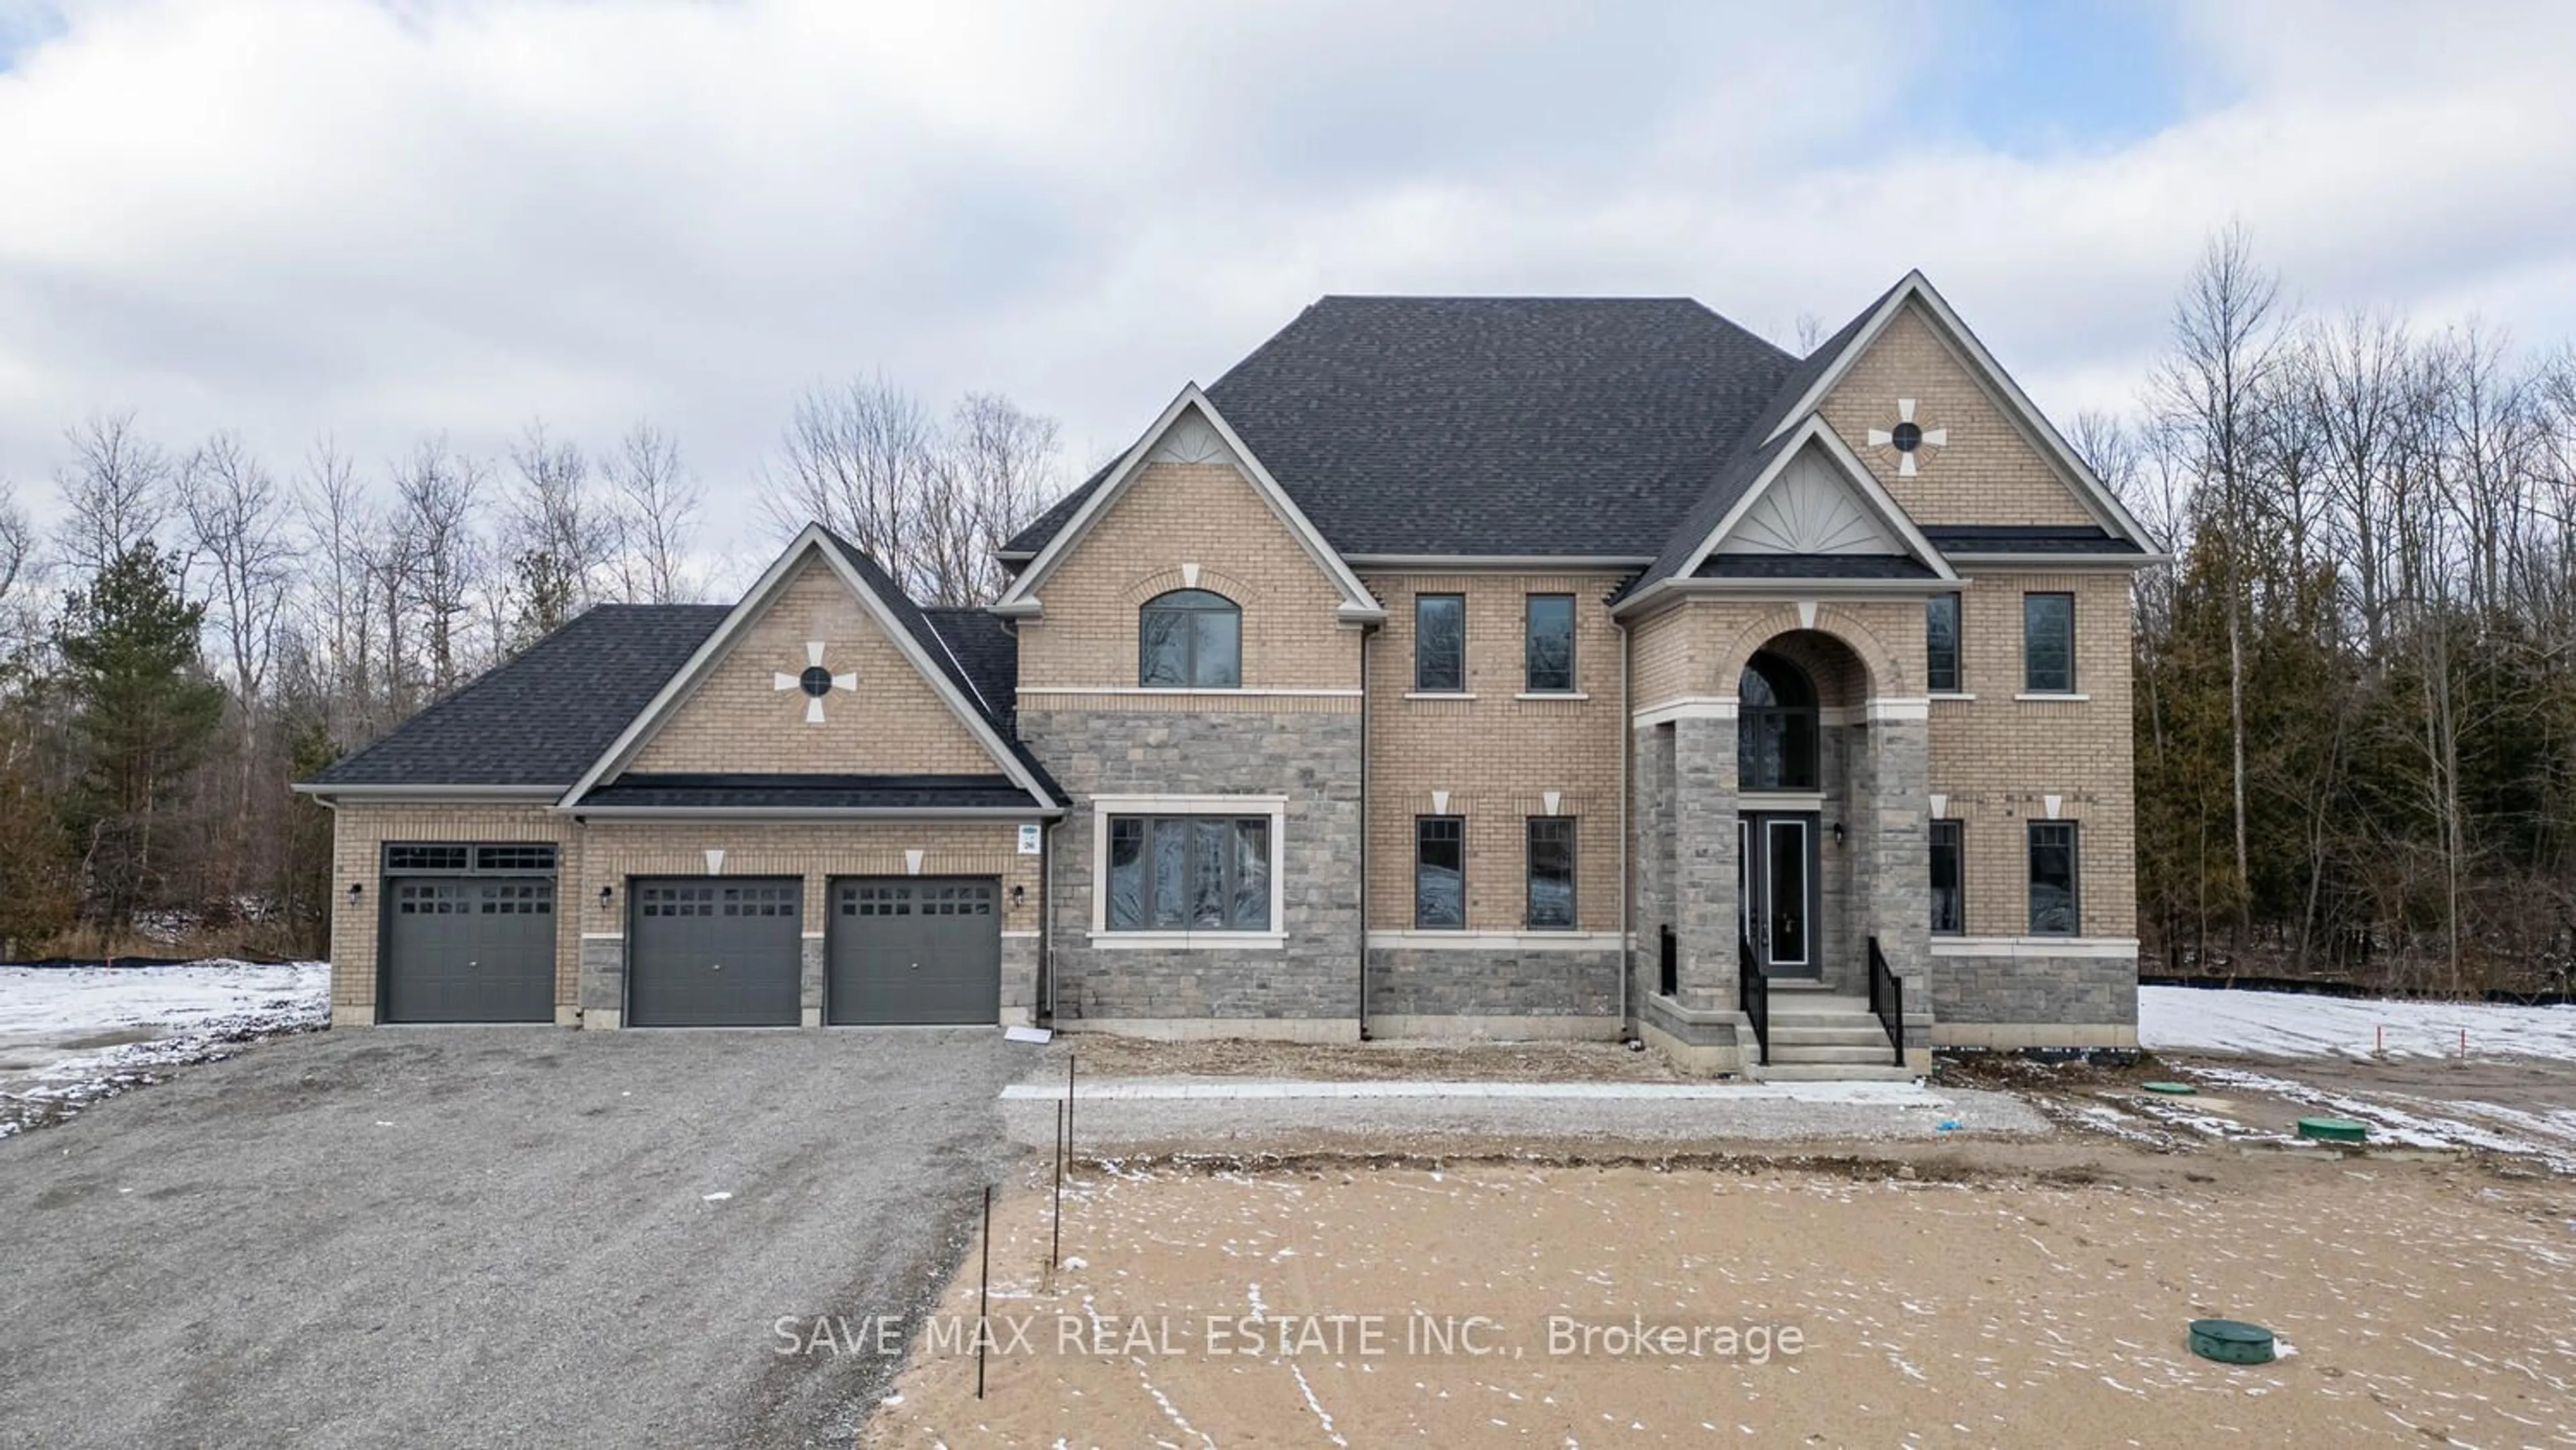 Home with brick exterior material for 26 Birchwood Lane, Essa Ontario L0M 1B1